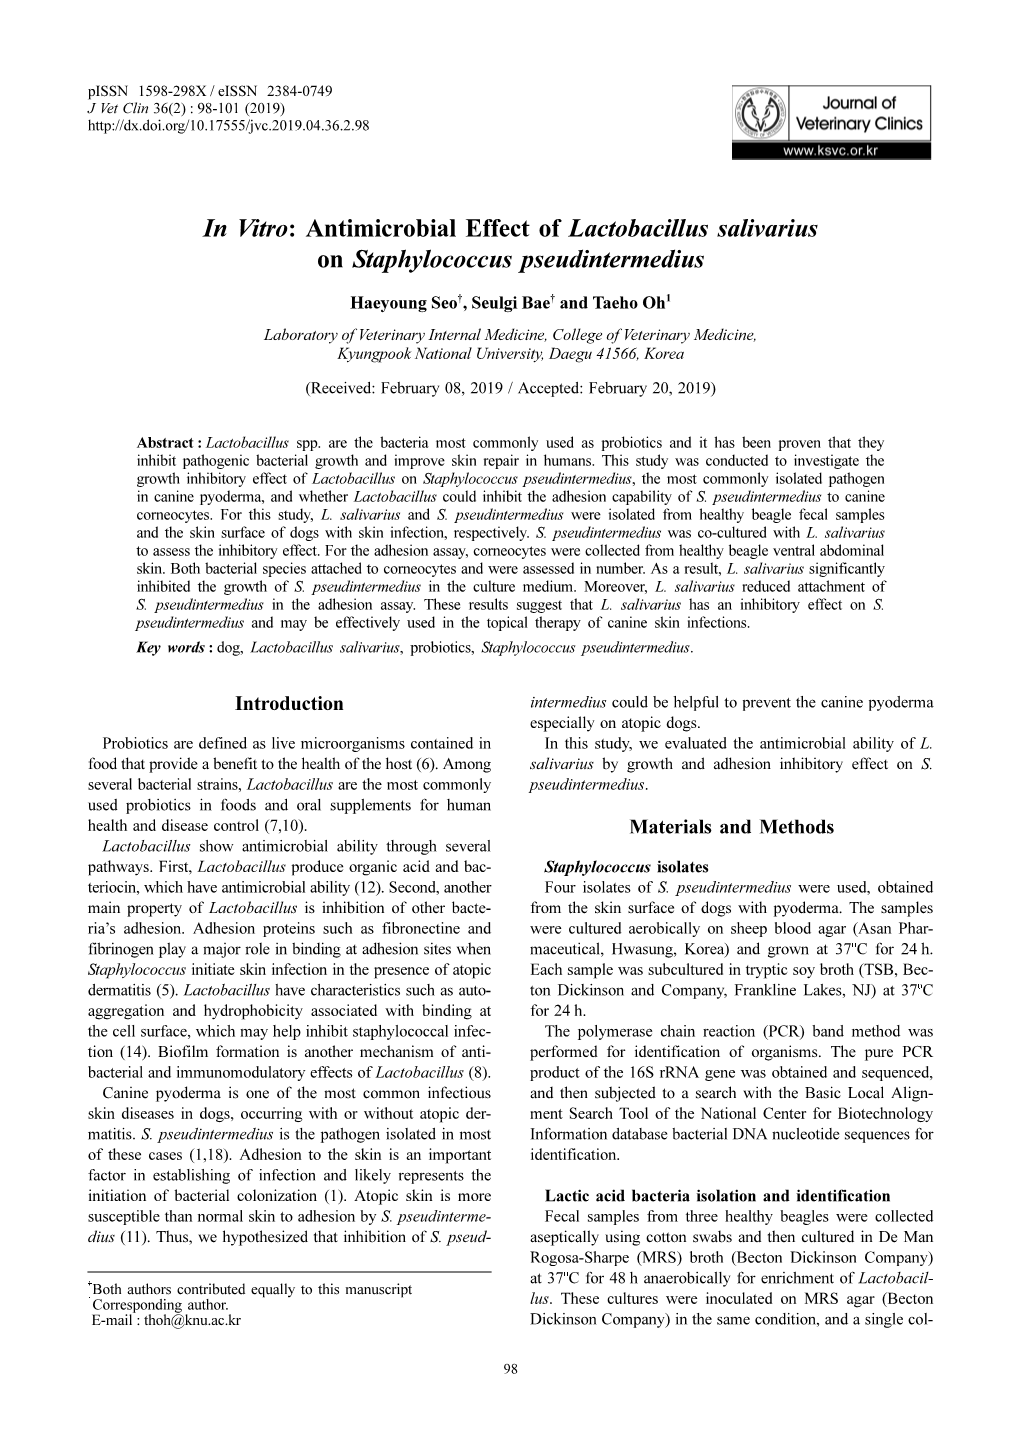 Antimicrobial Effect of Lactobacillus Salivarius on Staphylococcus Pseudintermedius